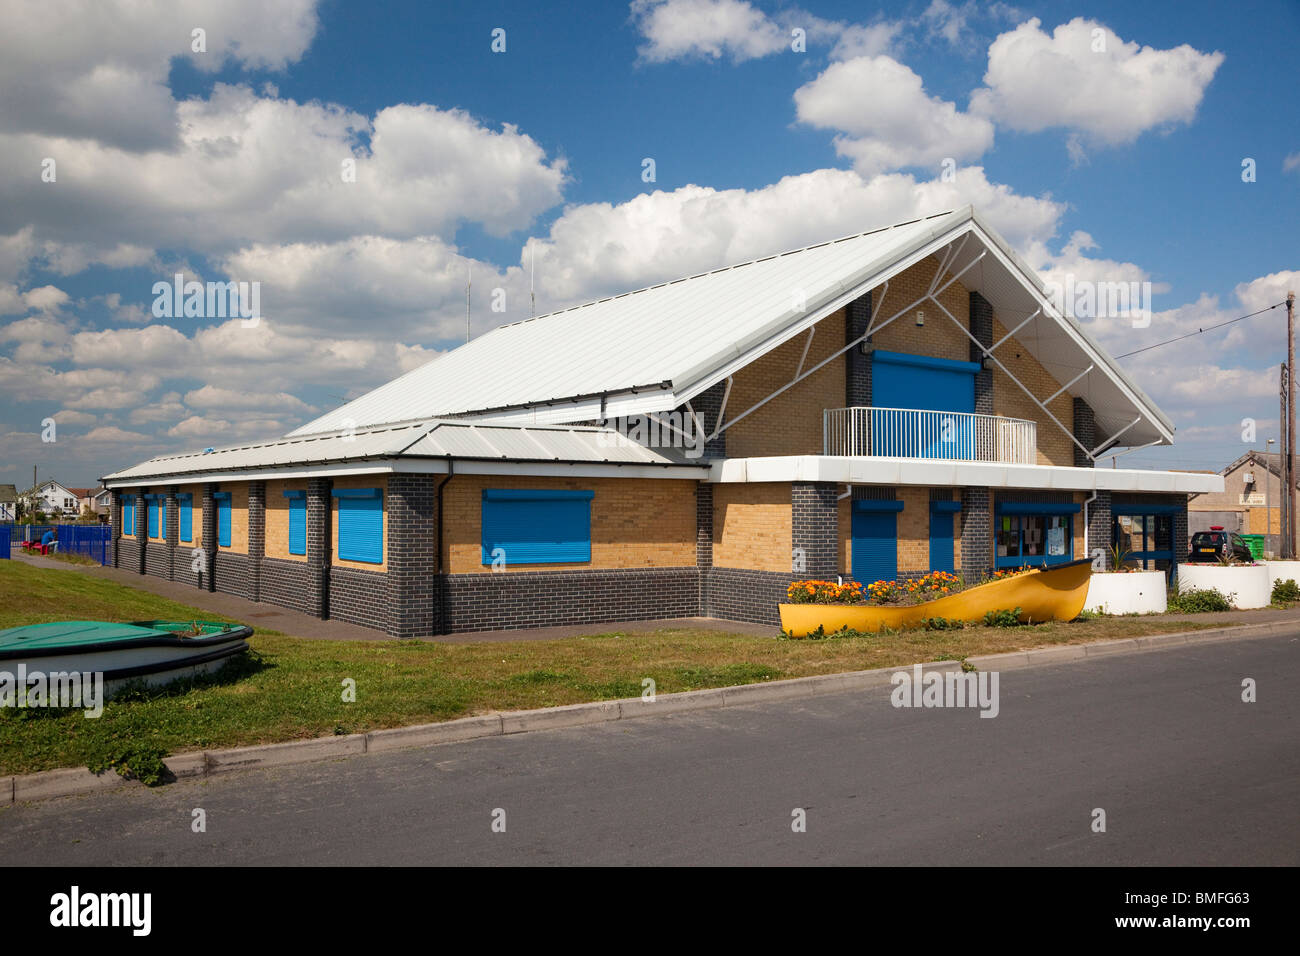 The new community centre in Jaywick, Essex, UK Stock Photo